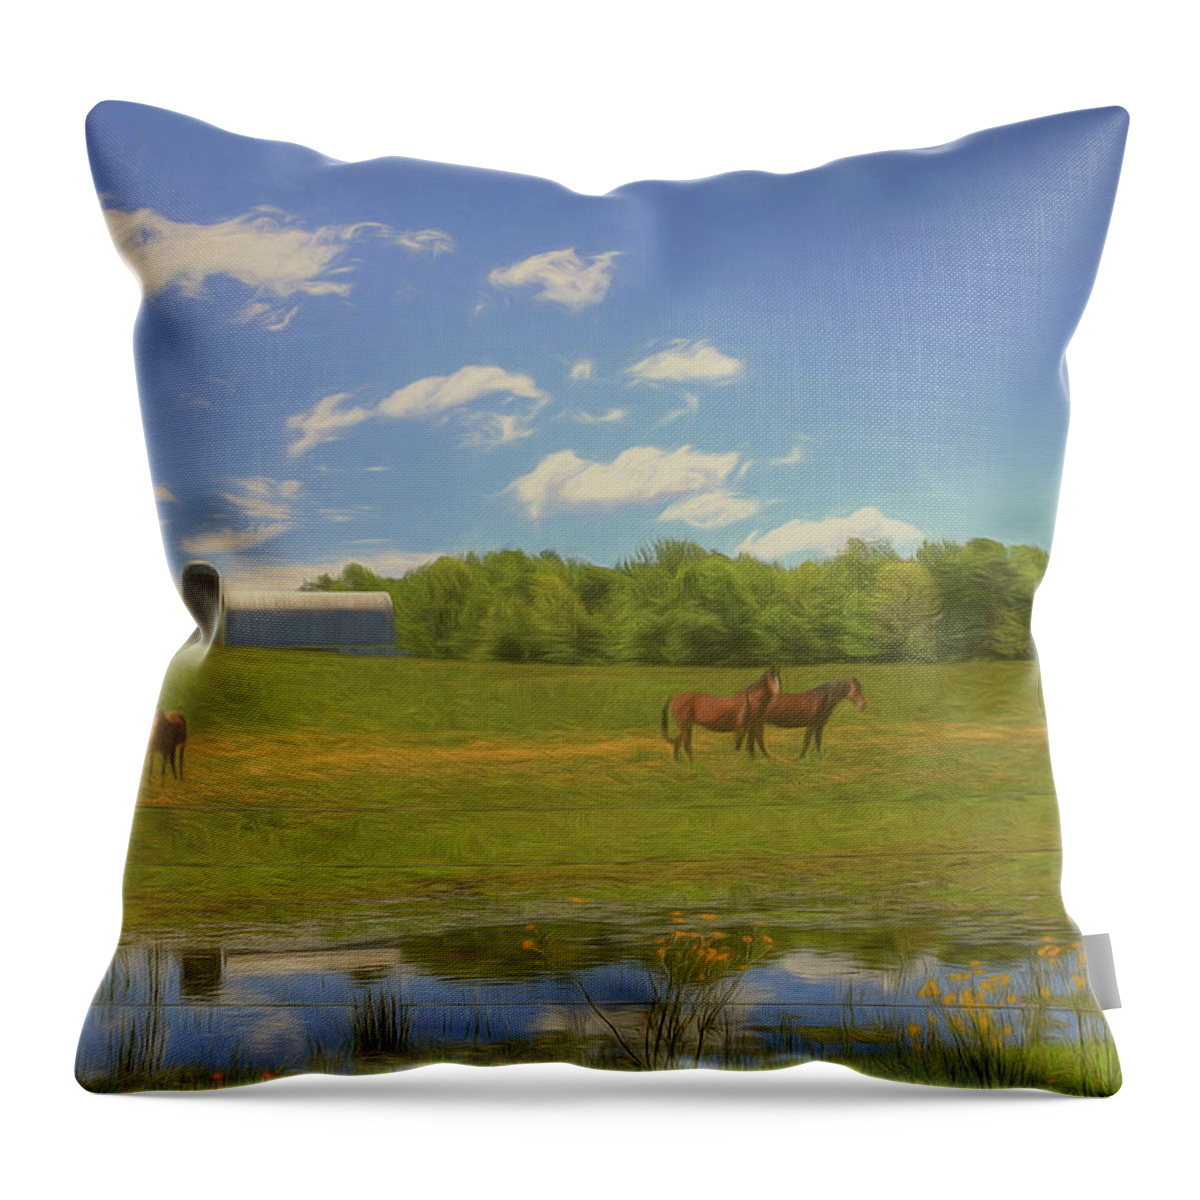 Horses Throw Pillow featuring the digital art Enjoying Spring by Sharon Batdorf